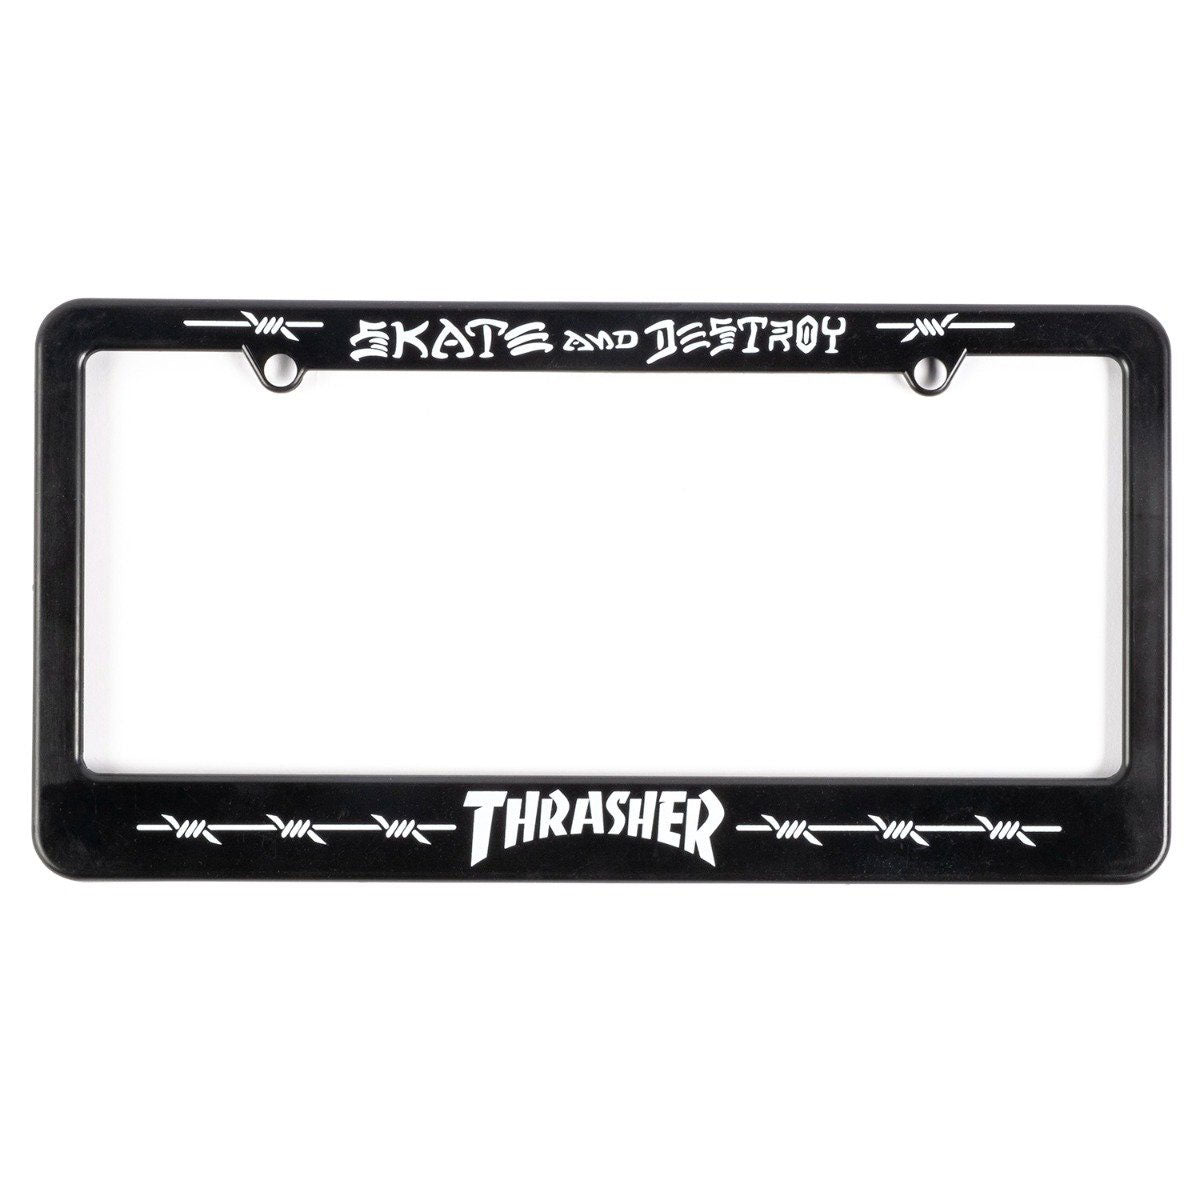 Thrasher Barbed Wire License Plate Holder - Black image 1